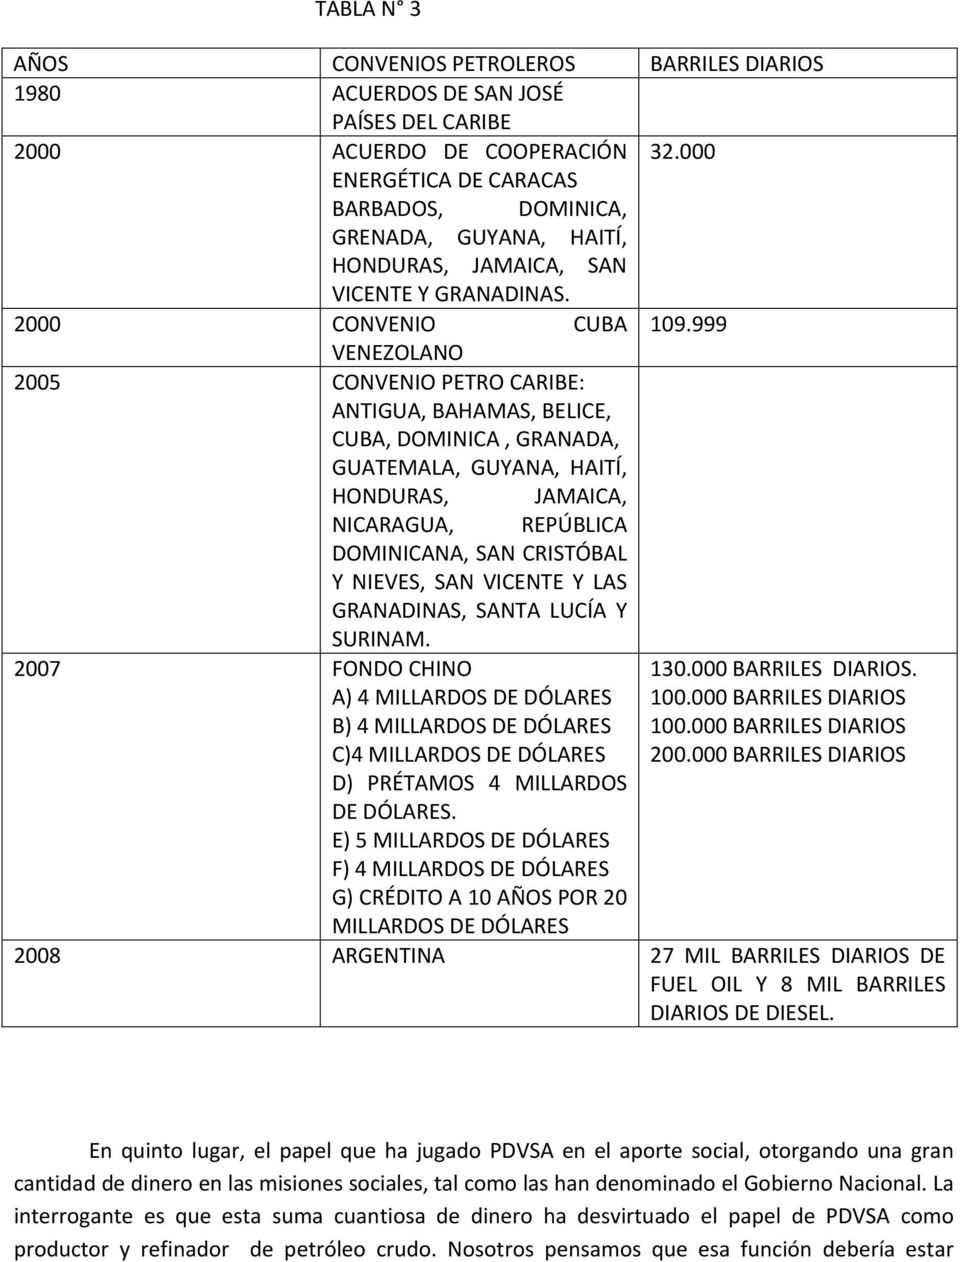 999 VENEZOLANO 2005 CONVENIO PETRO CARIBE: ANTIGUA, BAHAMAS, BELICE, CUBA, DOMINICA, GRANADA, GUATEMALA, GUYANA, HAITÍ, HONDURAS, JAMAICA, NICARAGUA, REPÚBLICA DOMINICANA, SAN CRISTÓBAL Y NIEVES, SAN